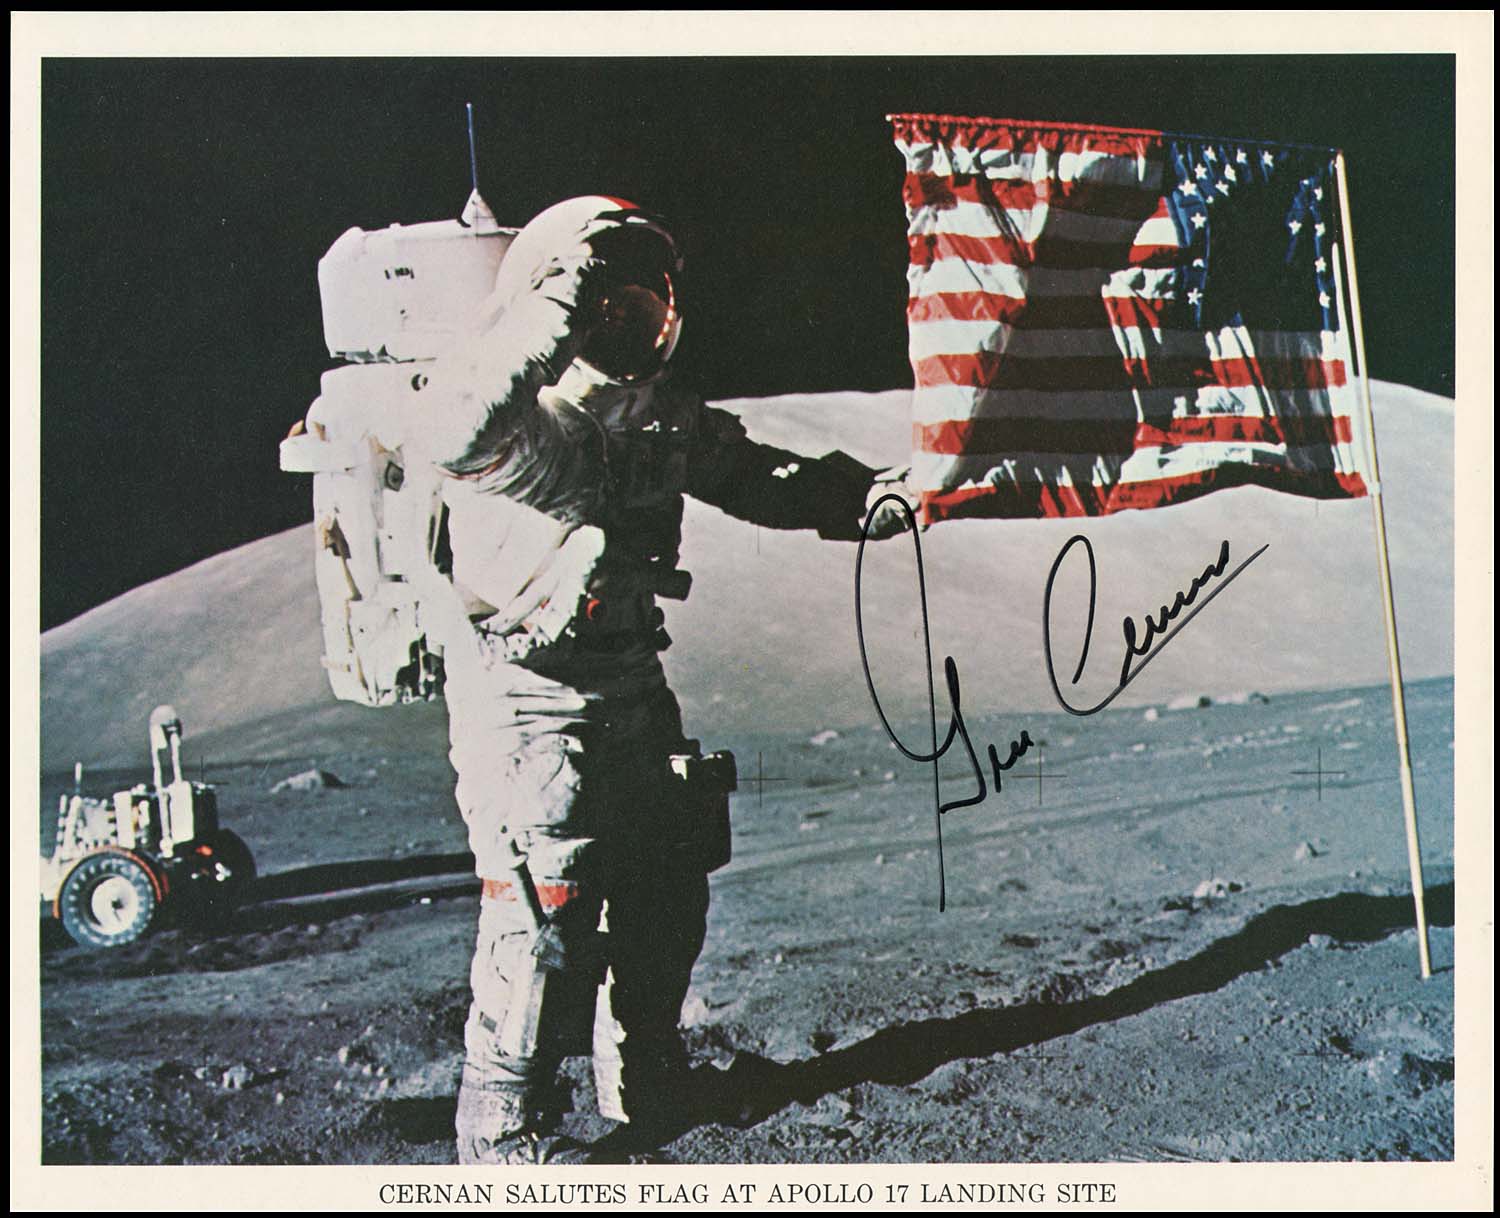 Armstrong on the moon. Аполлон 17 Юджин Сернан. Юджин Сернан на Луне. Армстронг первый на Луне.